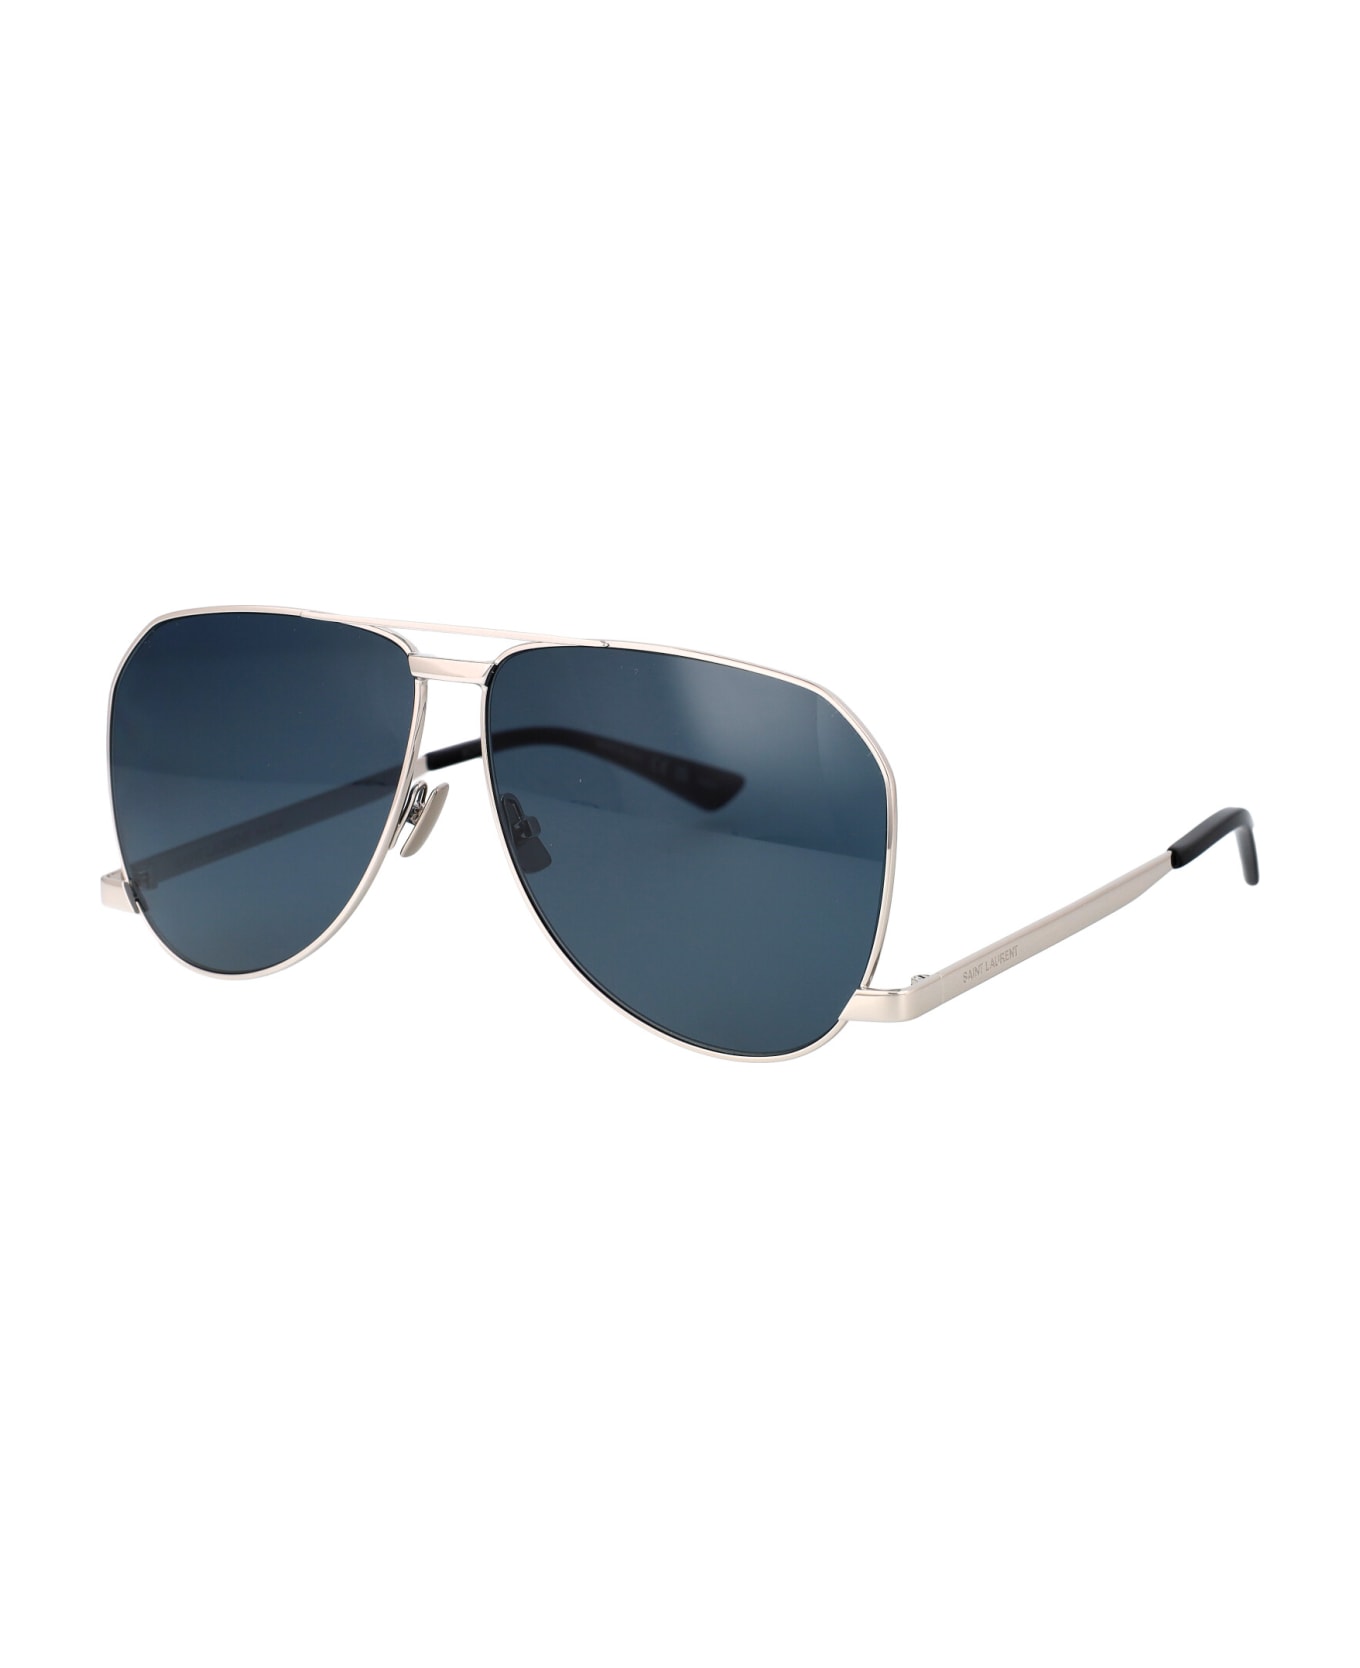 Saint Laurent Eyewear Sl 690 Dust Sunglasses - 003 SILVER SILVER BLUE